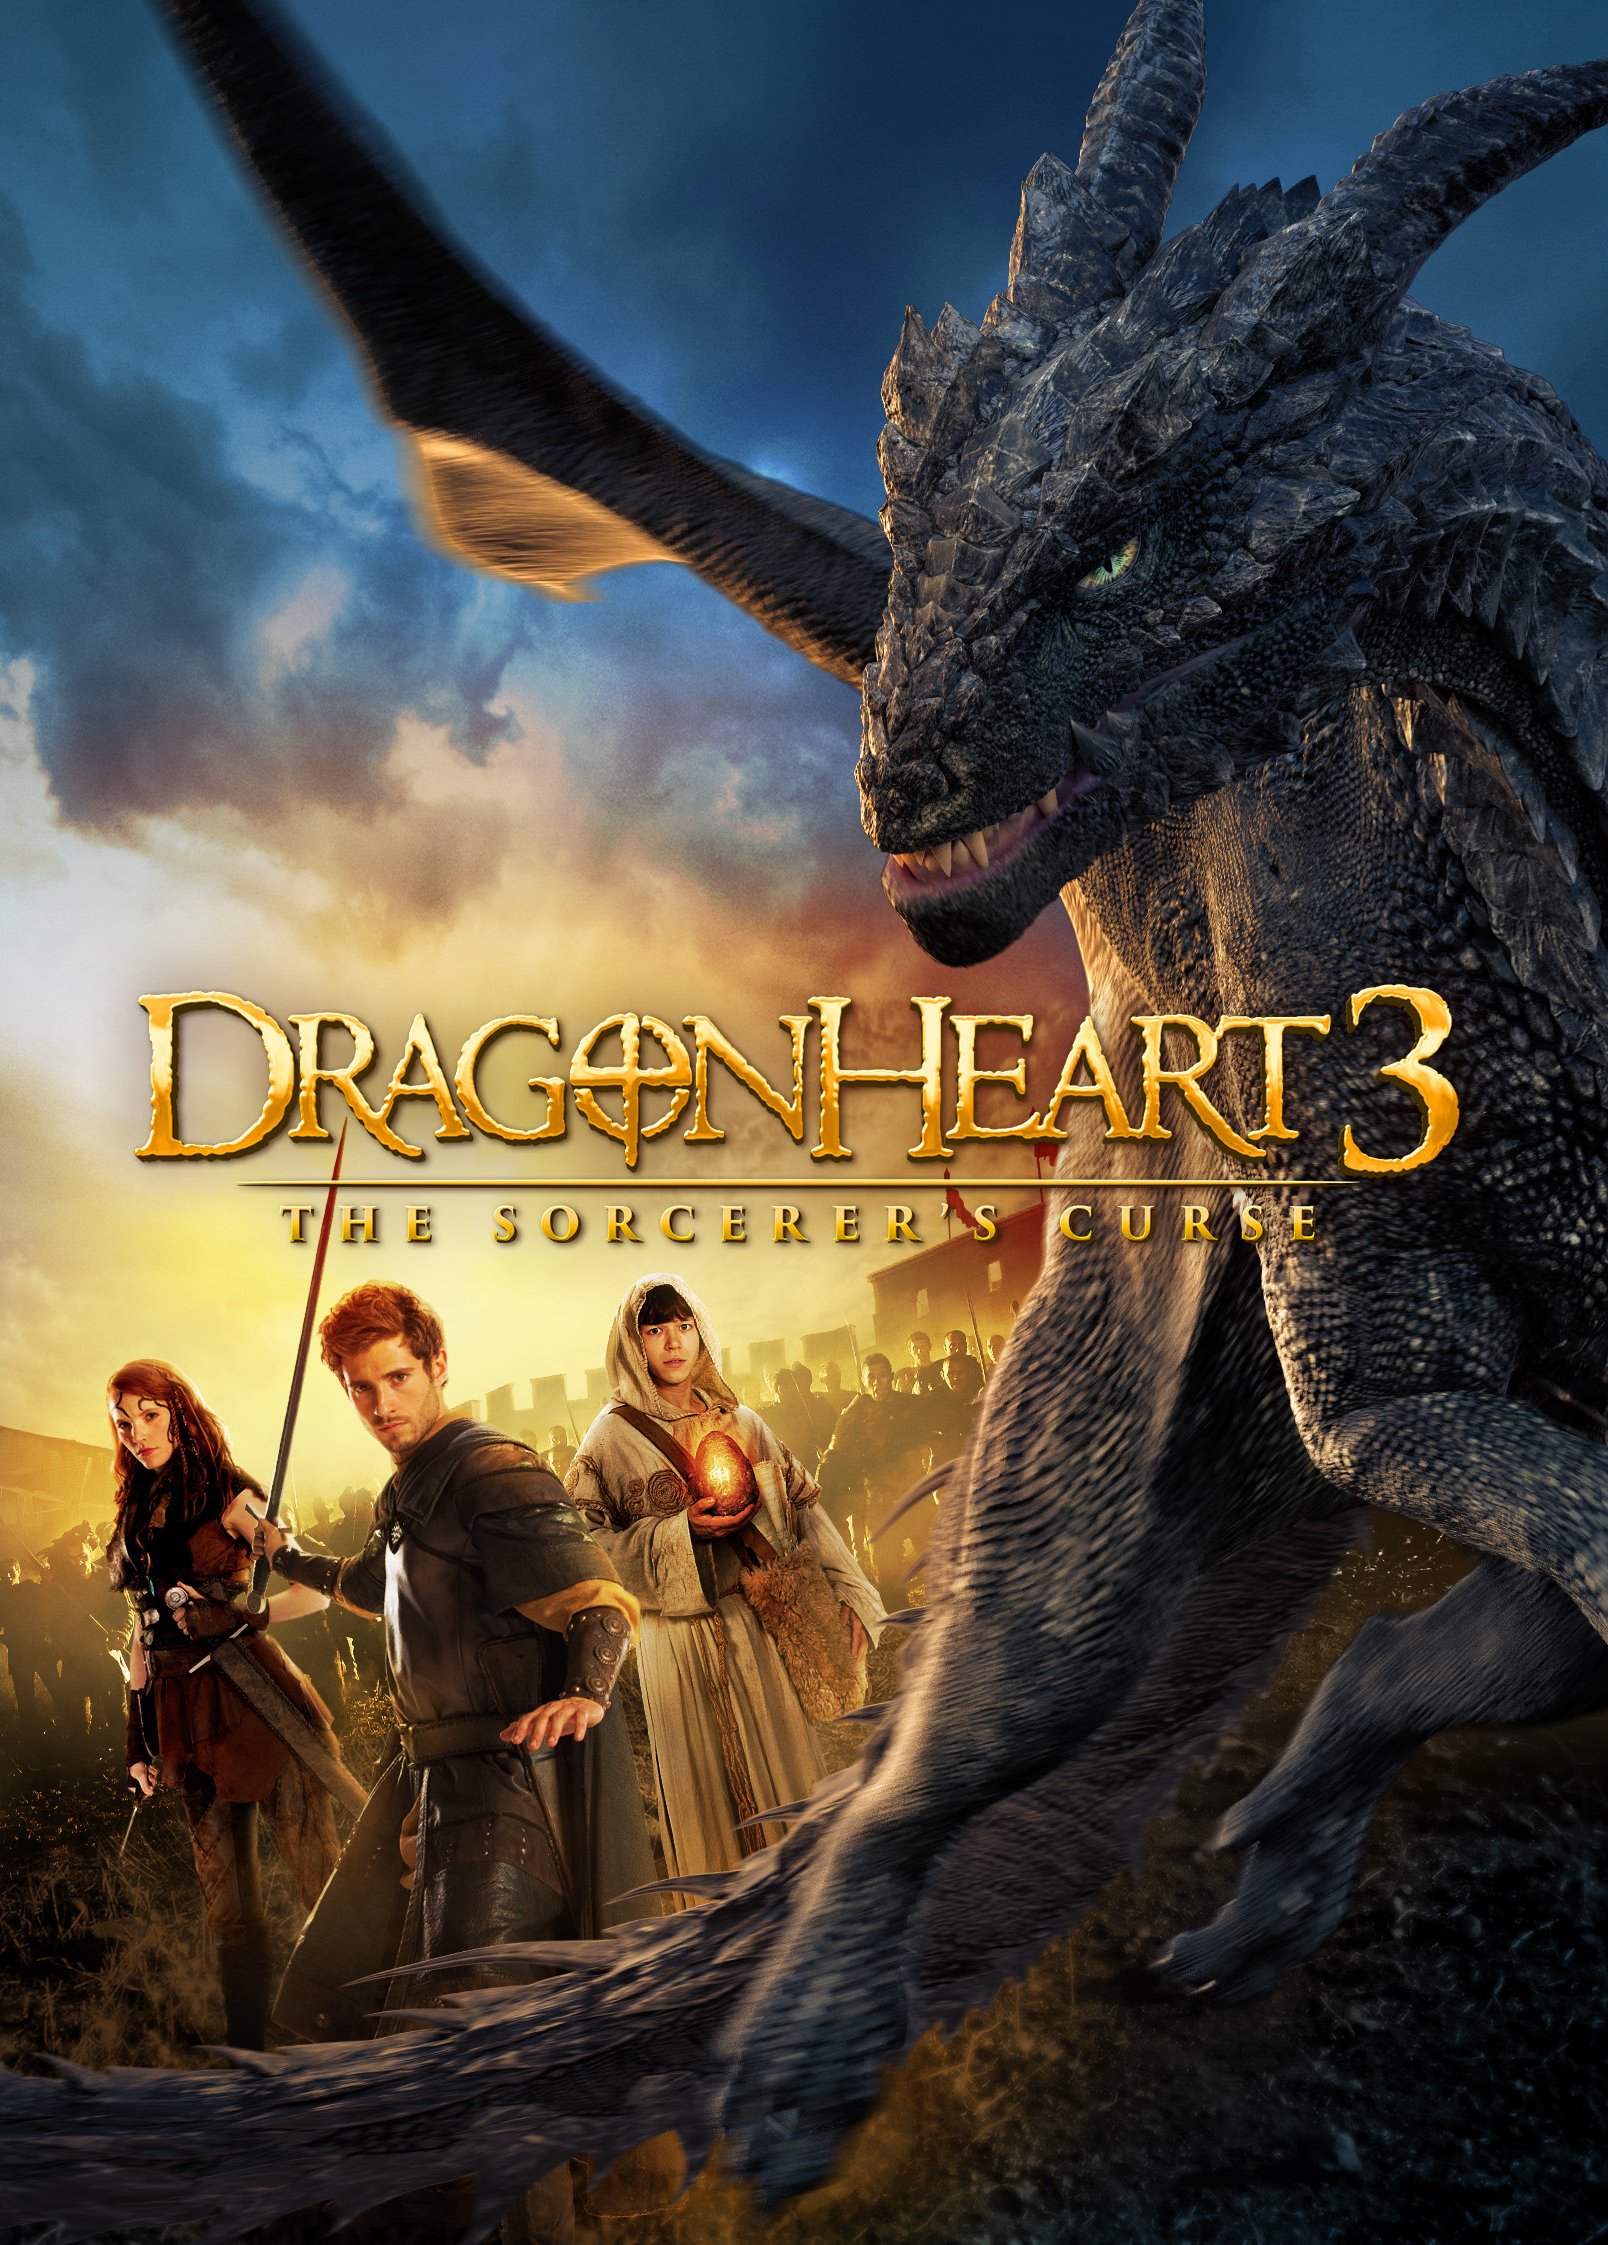 Dragonheart 3 The Sorcerer s Curse (2015) ดราก้อนฮาร์ท 3 มังกรไฟผจญภัยล้างคำสาป Julian Morris